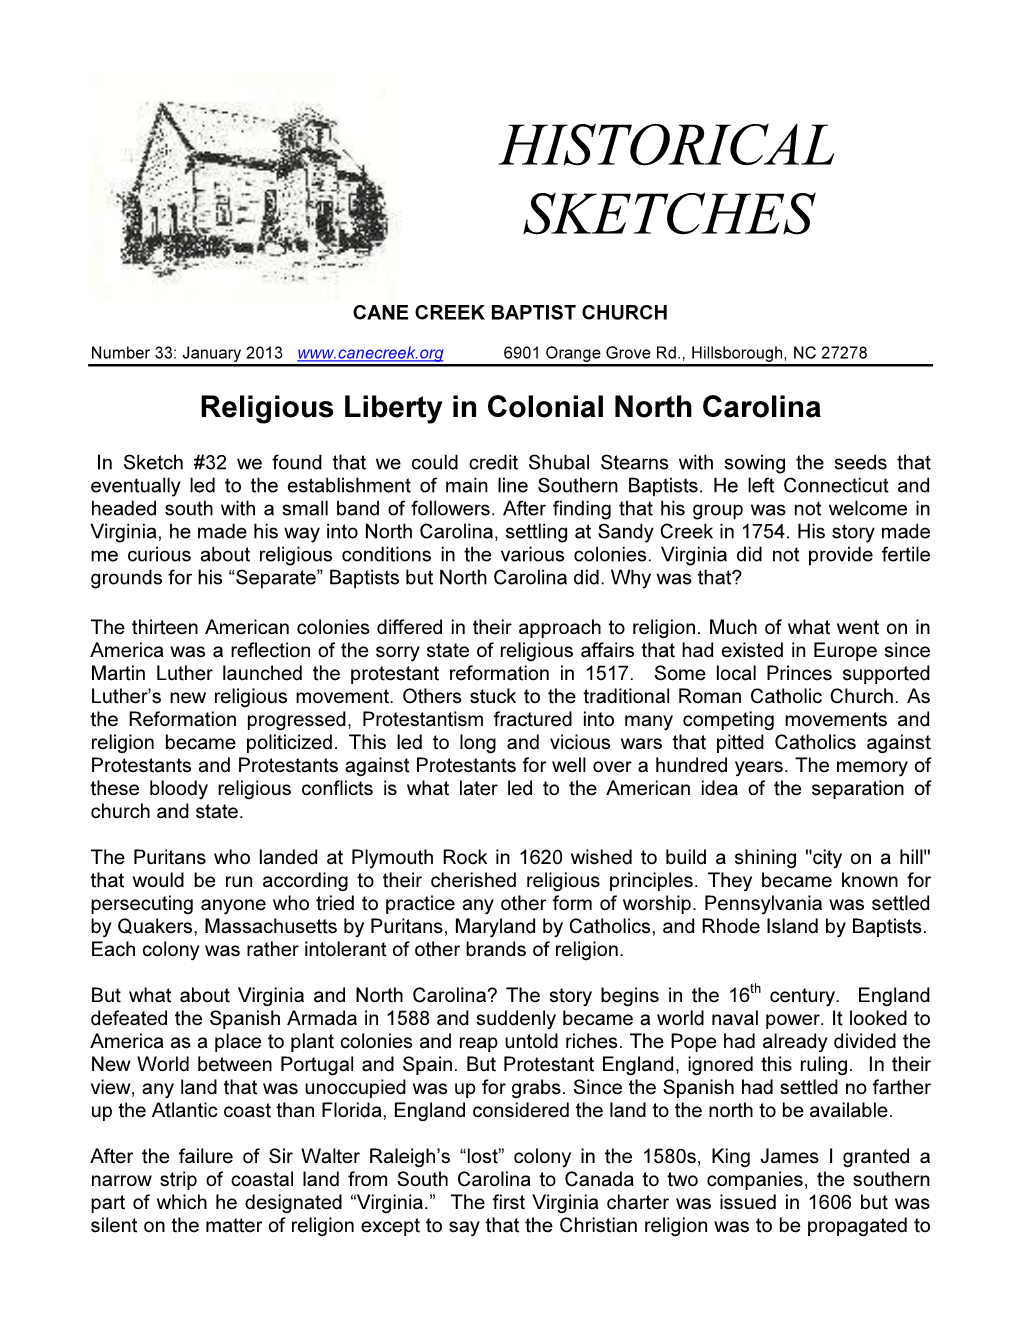 Religious Liberty in Colonial North Carolina